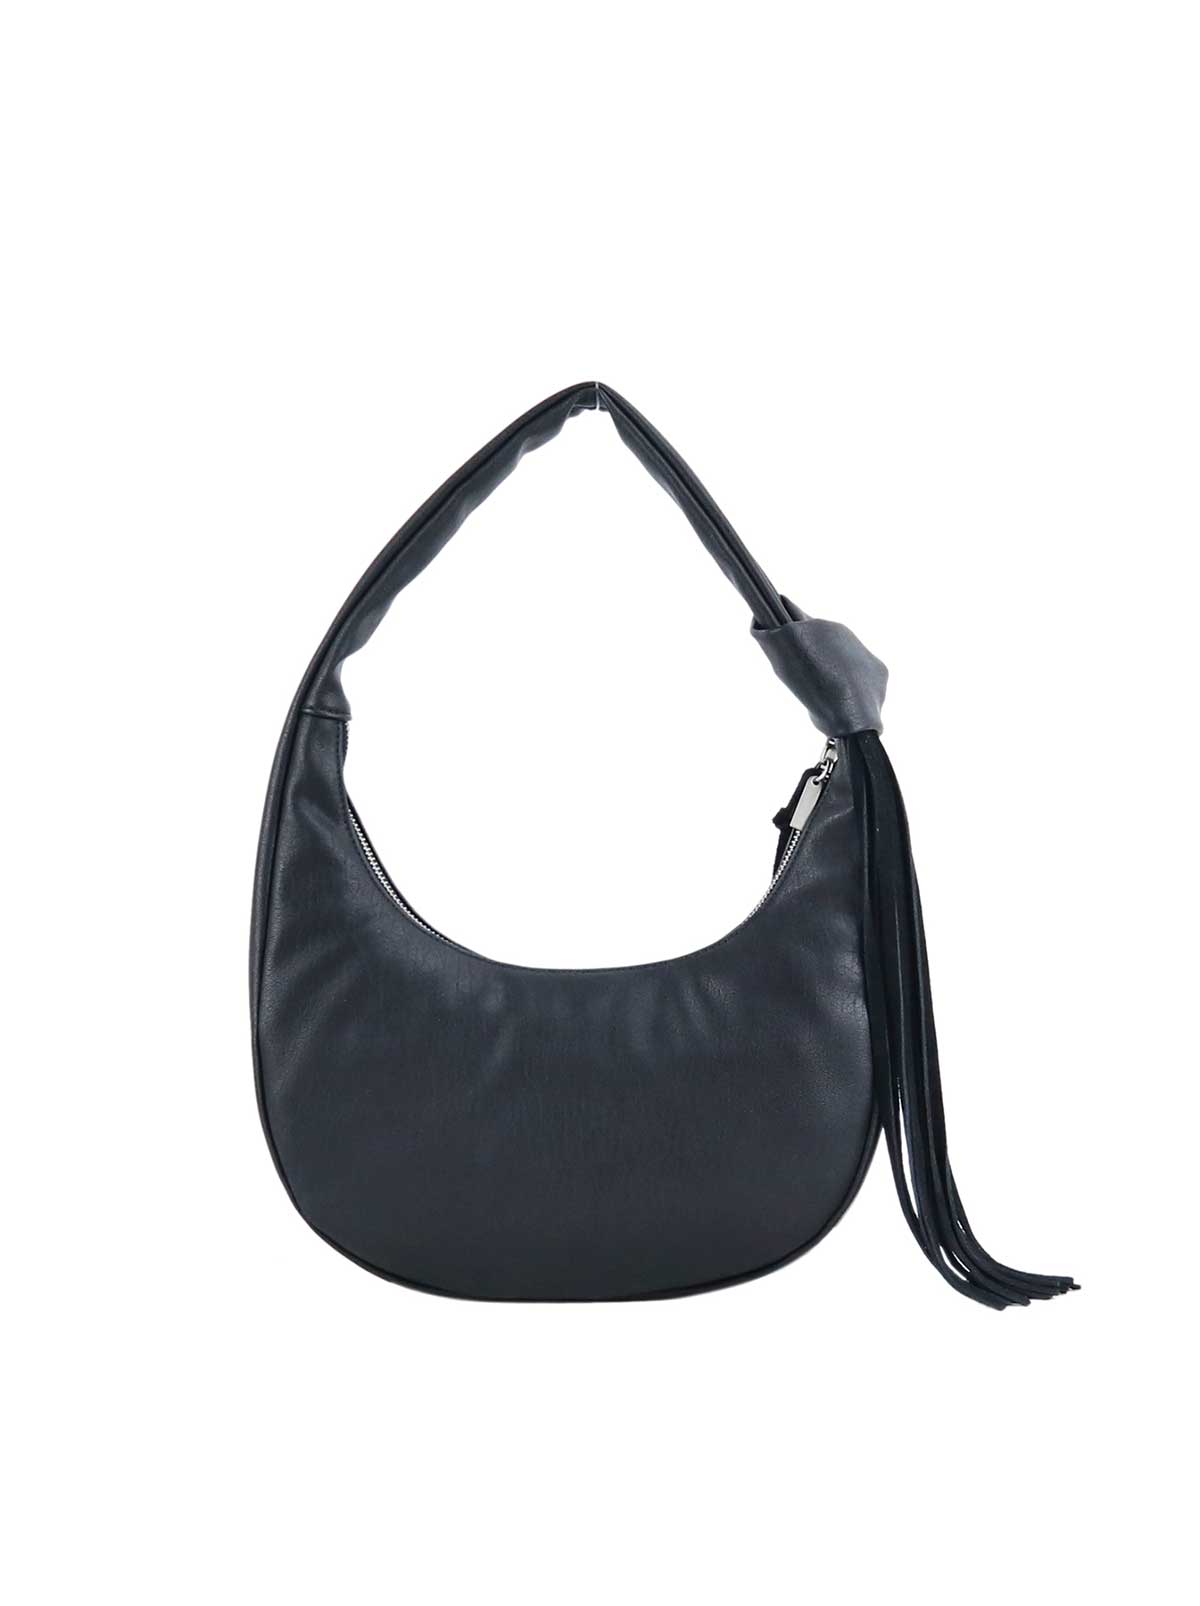 Jessica Simpson purse wallet black Jina handbag gold chain crossbody clutch  NWT | eBay